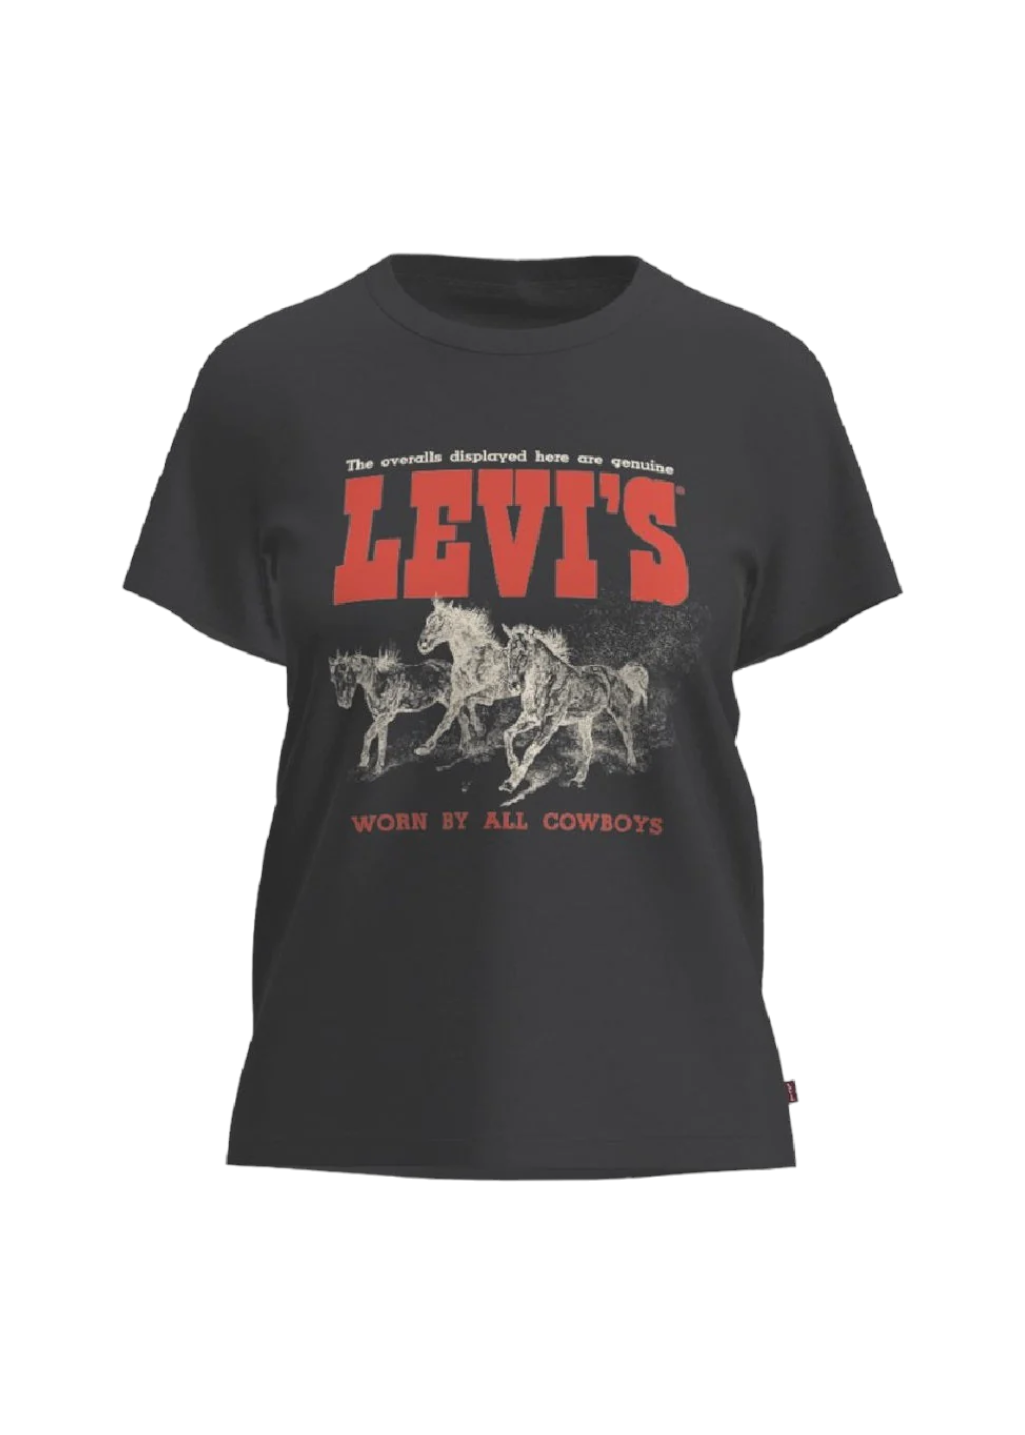 Levi's - The Perfect Tee - Horse Trio Black Oyster - Hardpressed Print Studio Inc.